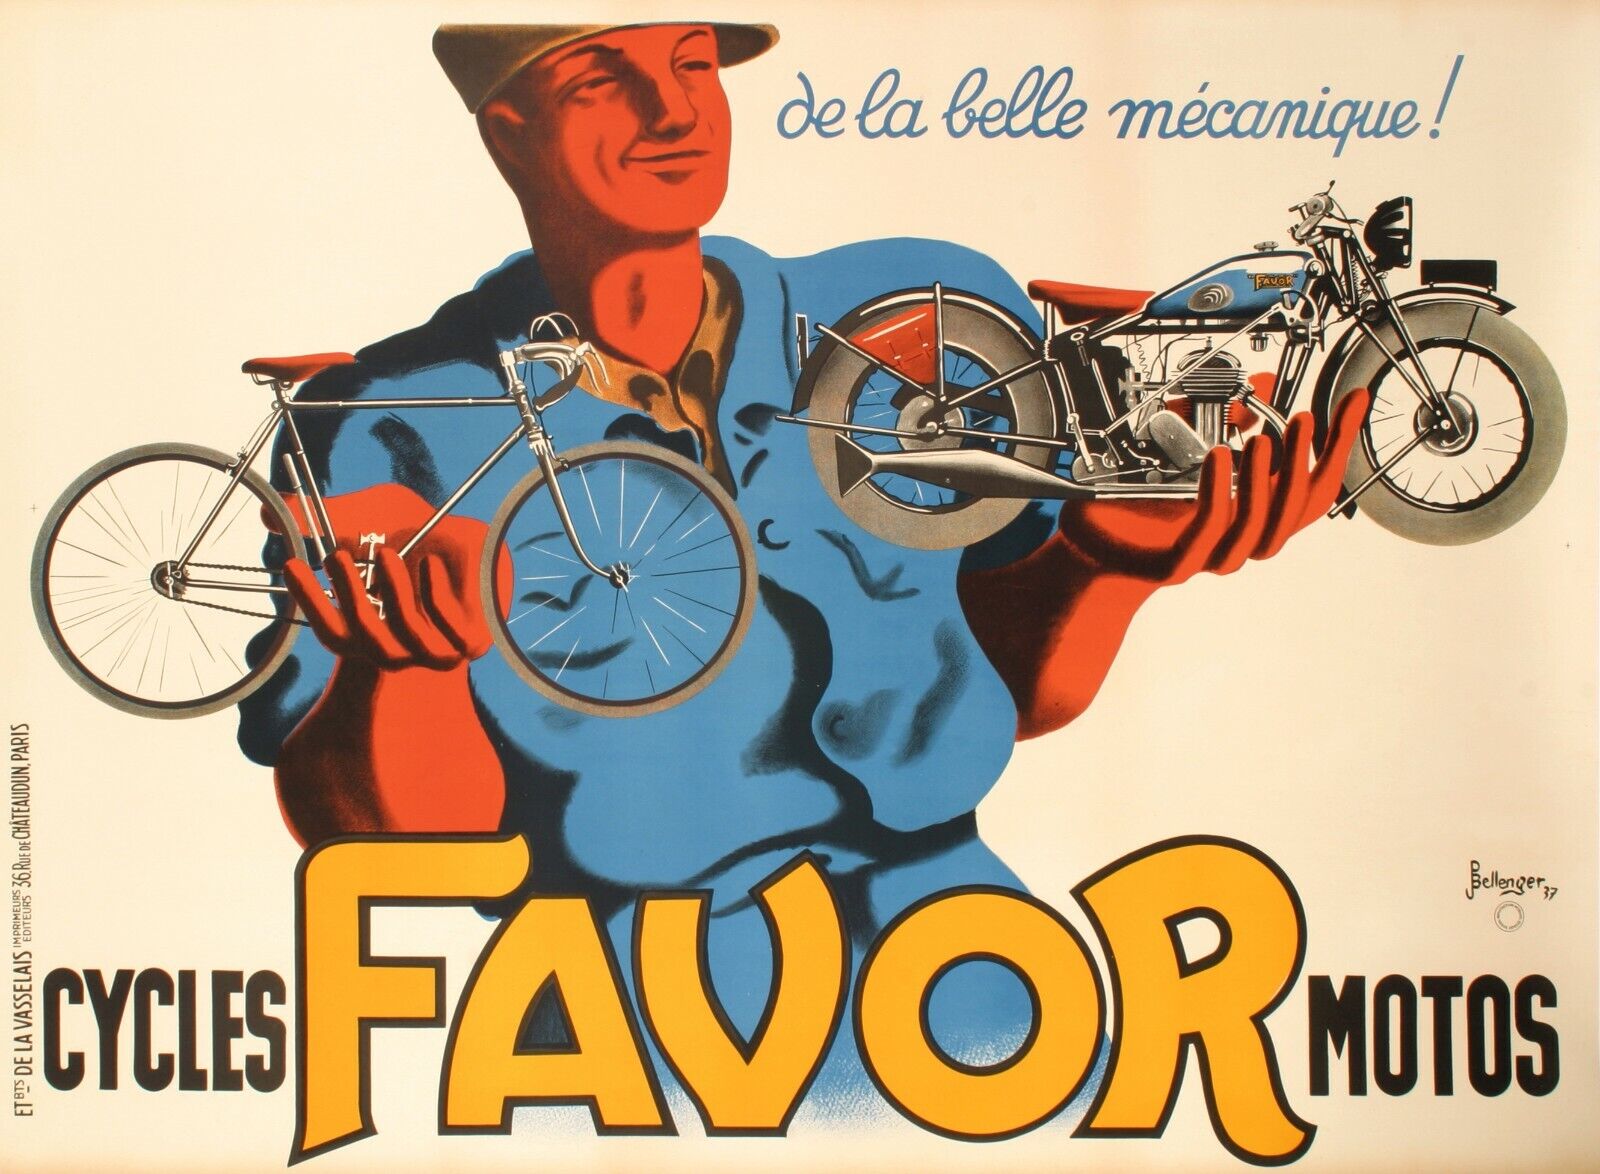 Original poster, Bellenger, Favor, Bike, Motorcycle, Cycles, Mechanic, 1937